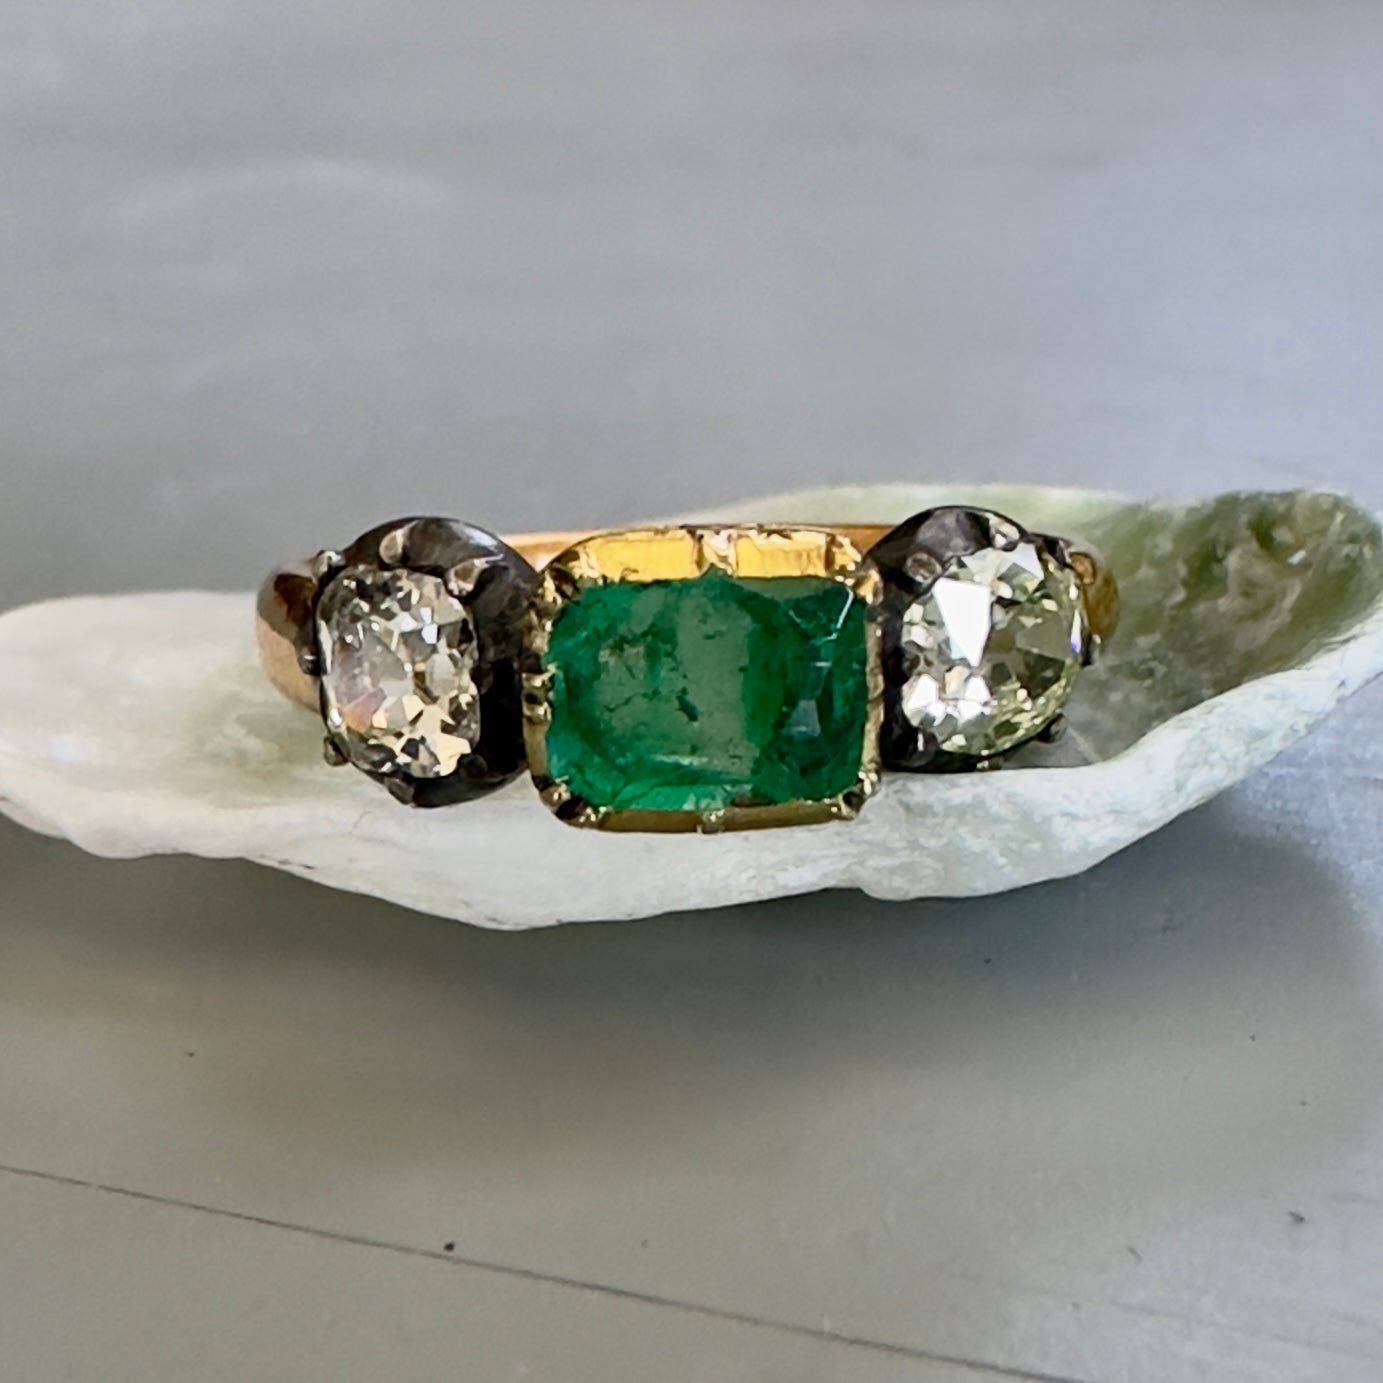 Bespoke Emerald & Diamond Ring